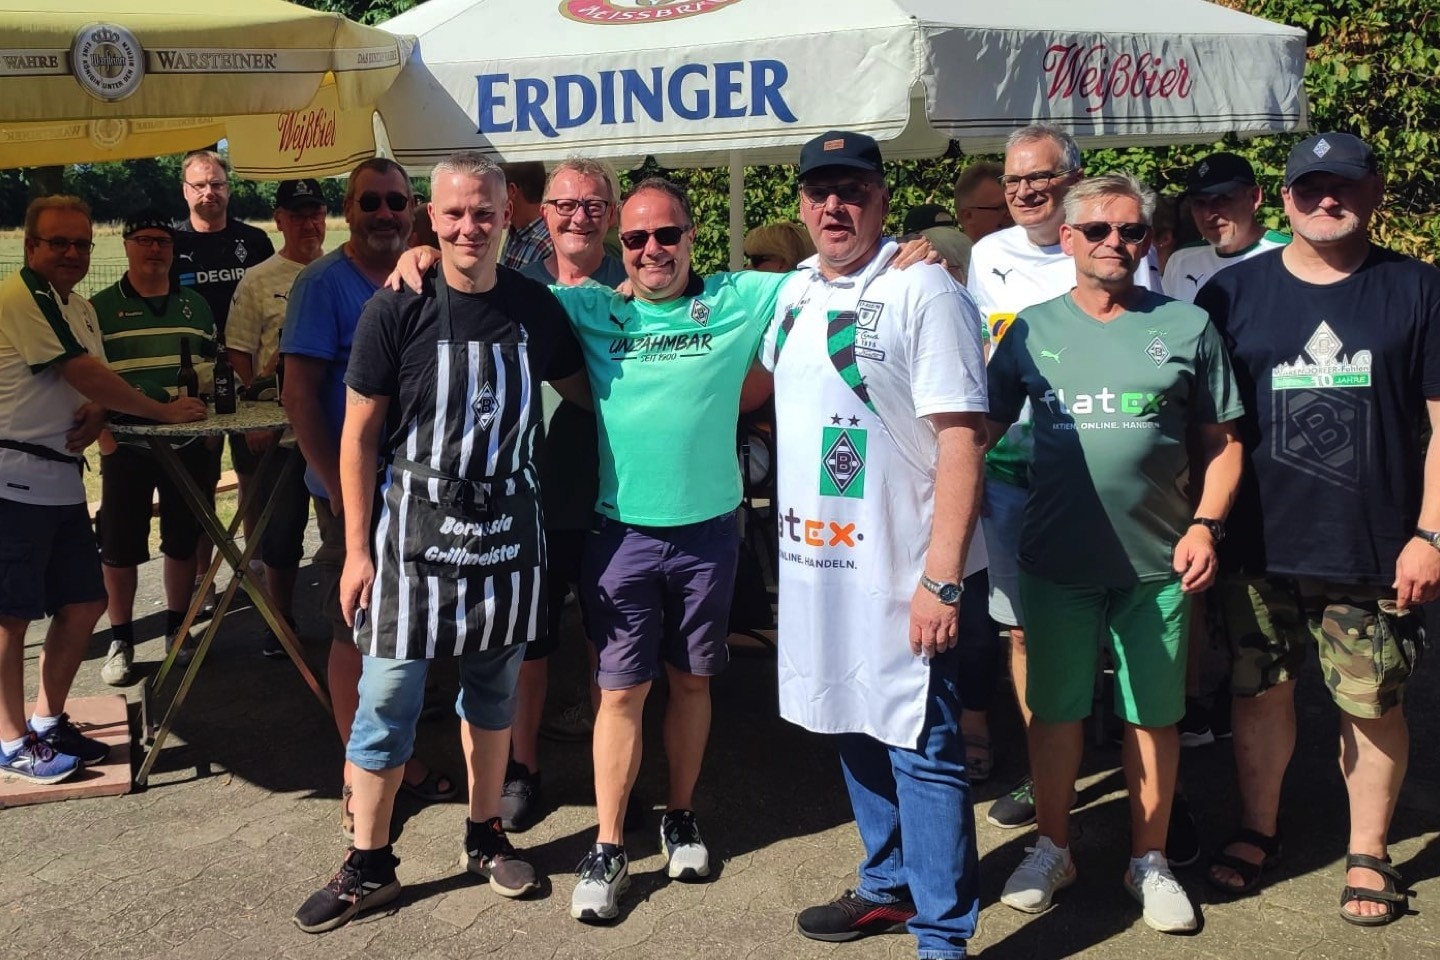 Sommerfest,Eddy Erpenbeck,Fanclub,Warendorfer-Fohlen,Borussia Mönchengladbach,